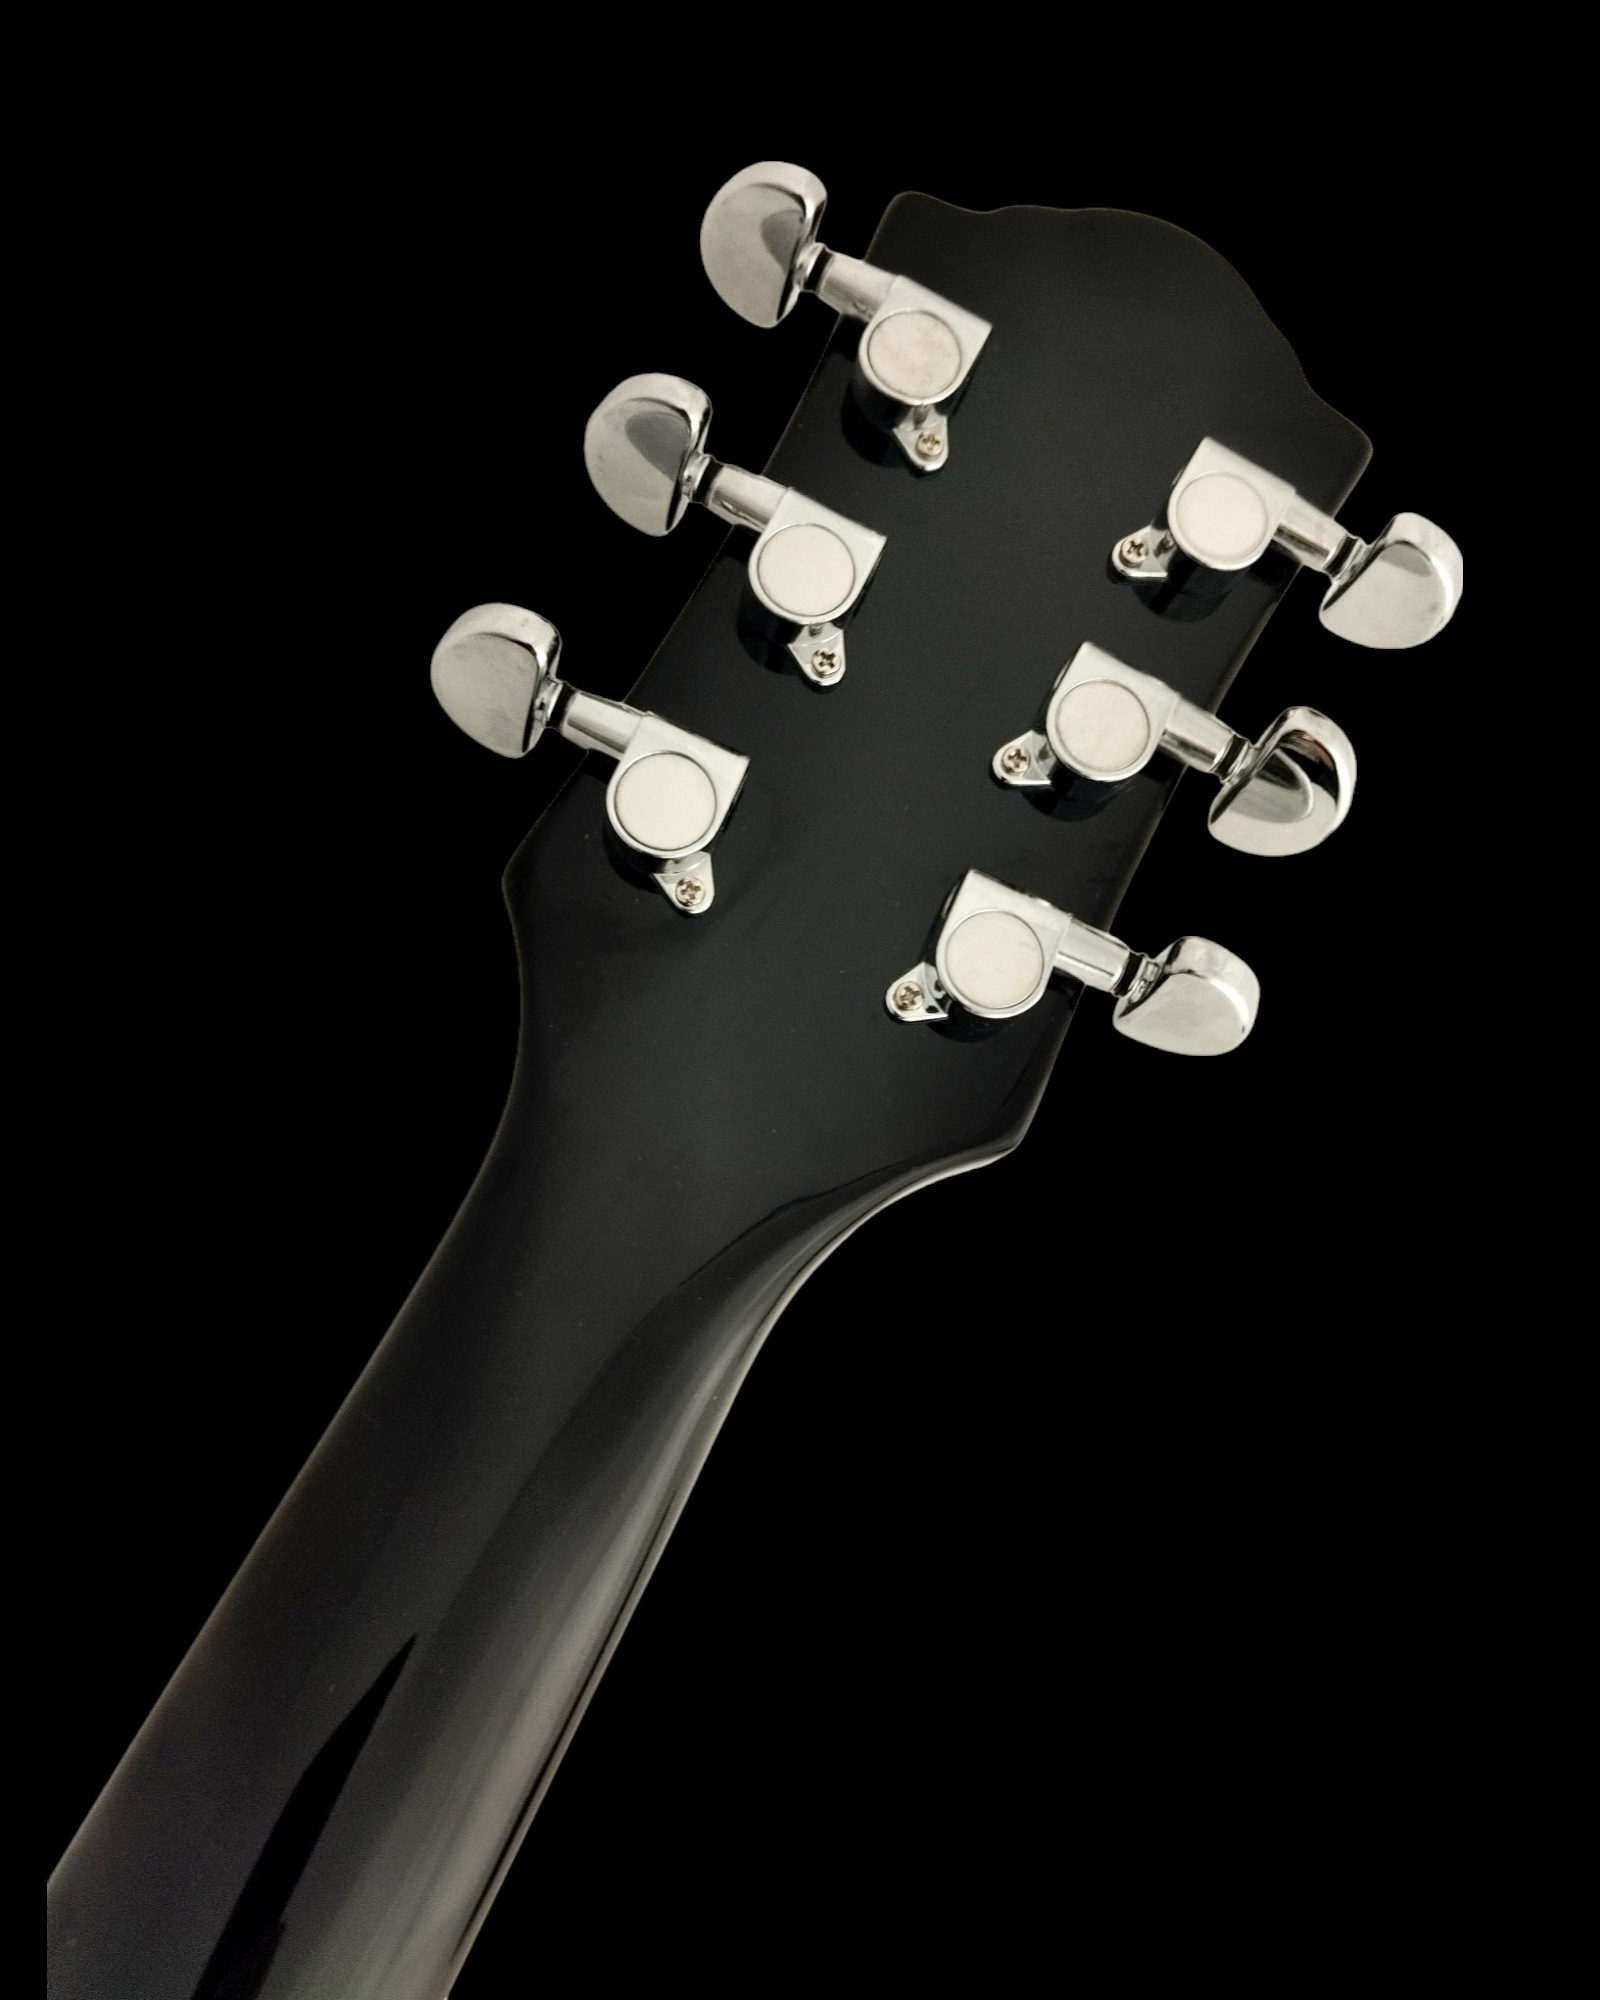 Haze Semi-Hollow 335-Style Flame Maple HES Electric Guitar - Black SEG272BK